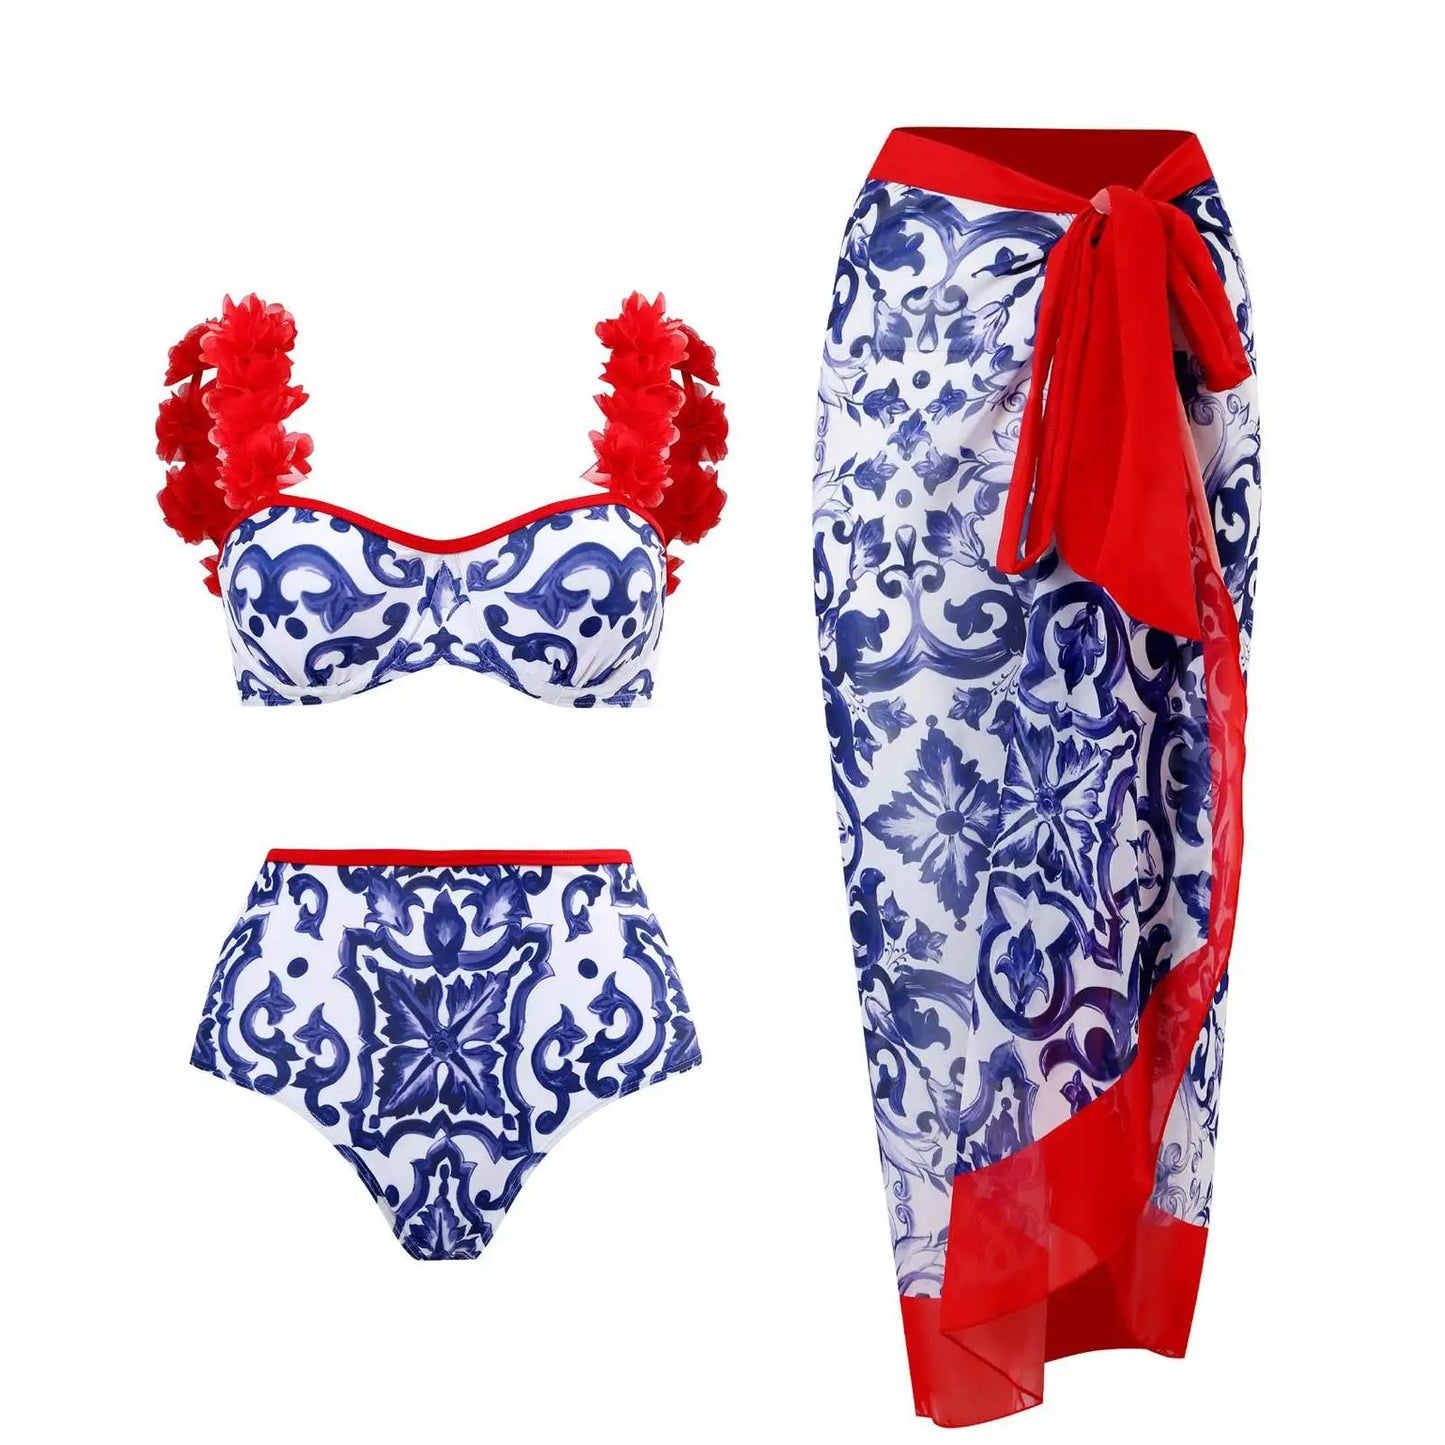 sandy beaches red sides blue mosaic styled bikini set